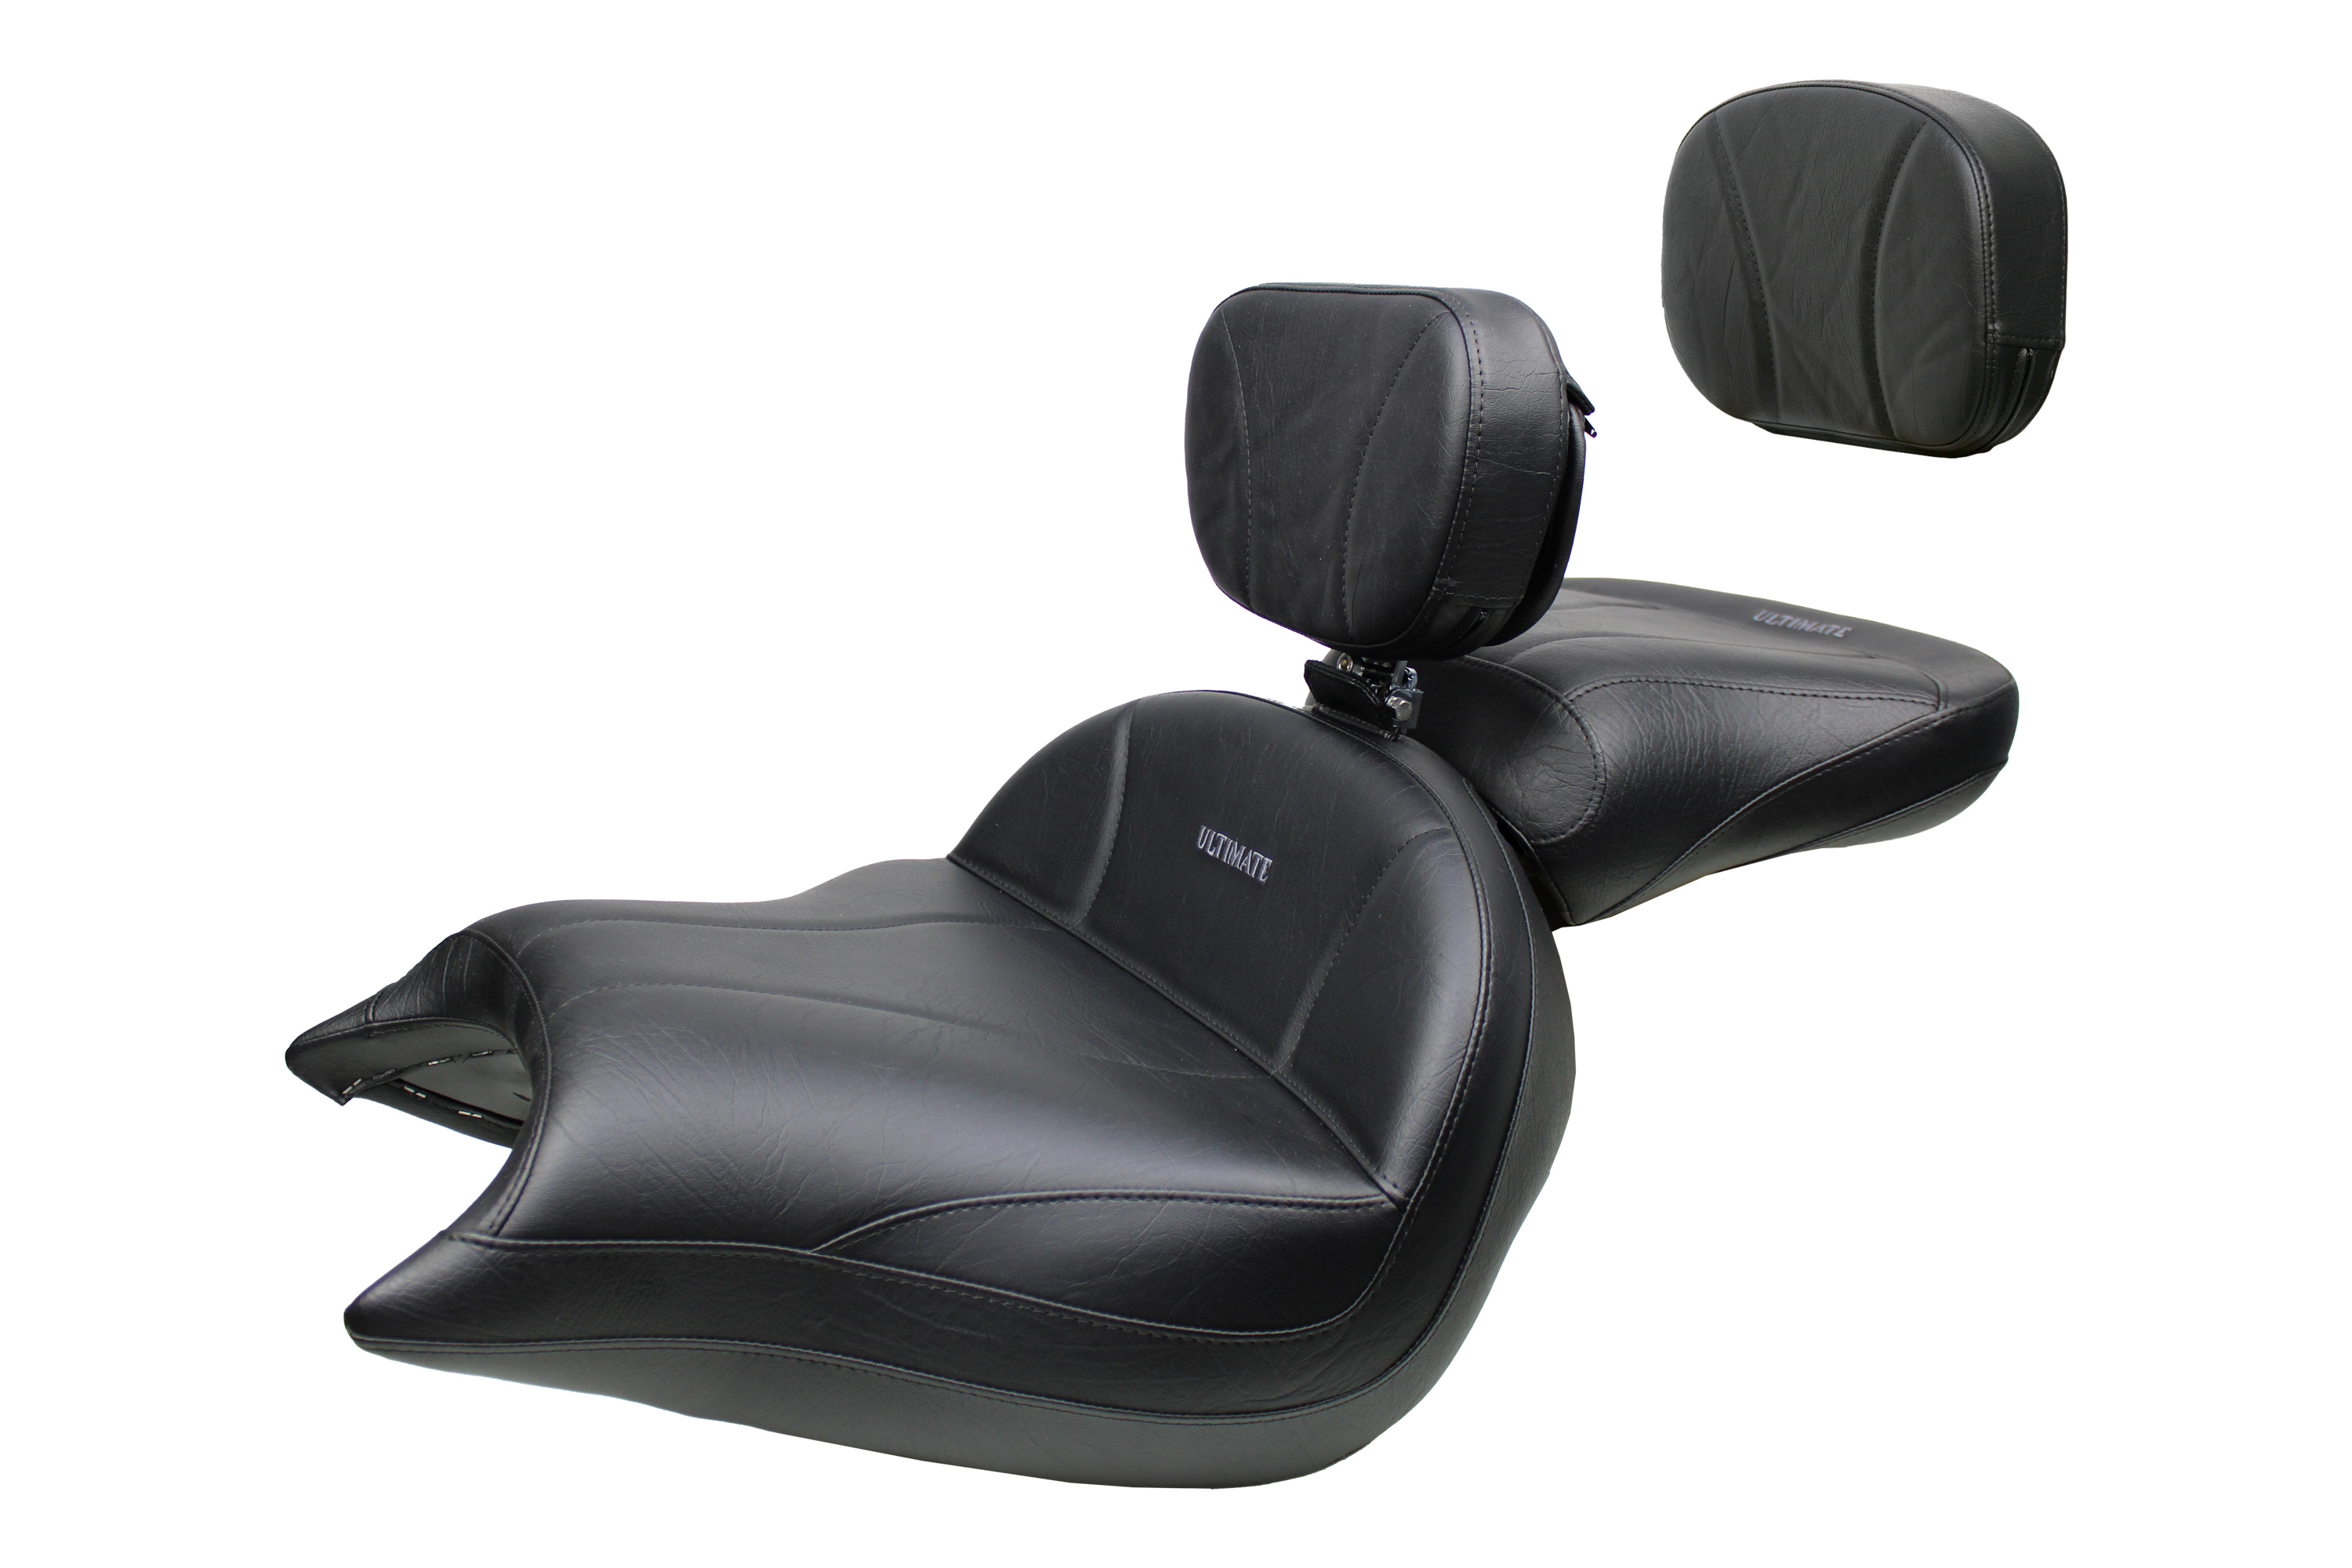 VTX 1800 N Neo Big Boy Seat, Passenger Seat, Driver Backrest and Sissy Bar Pad - Plain or Studded